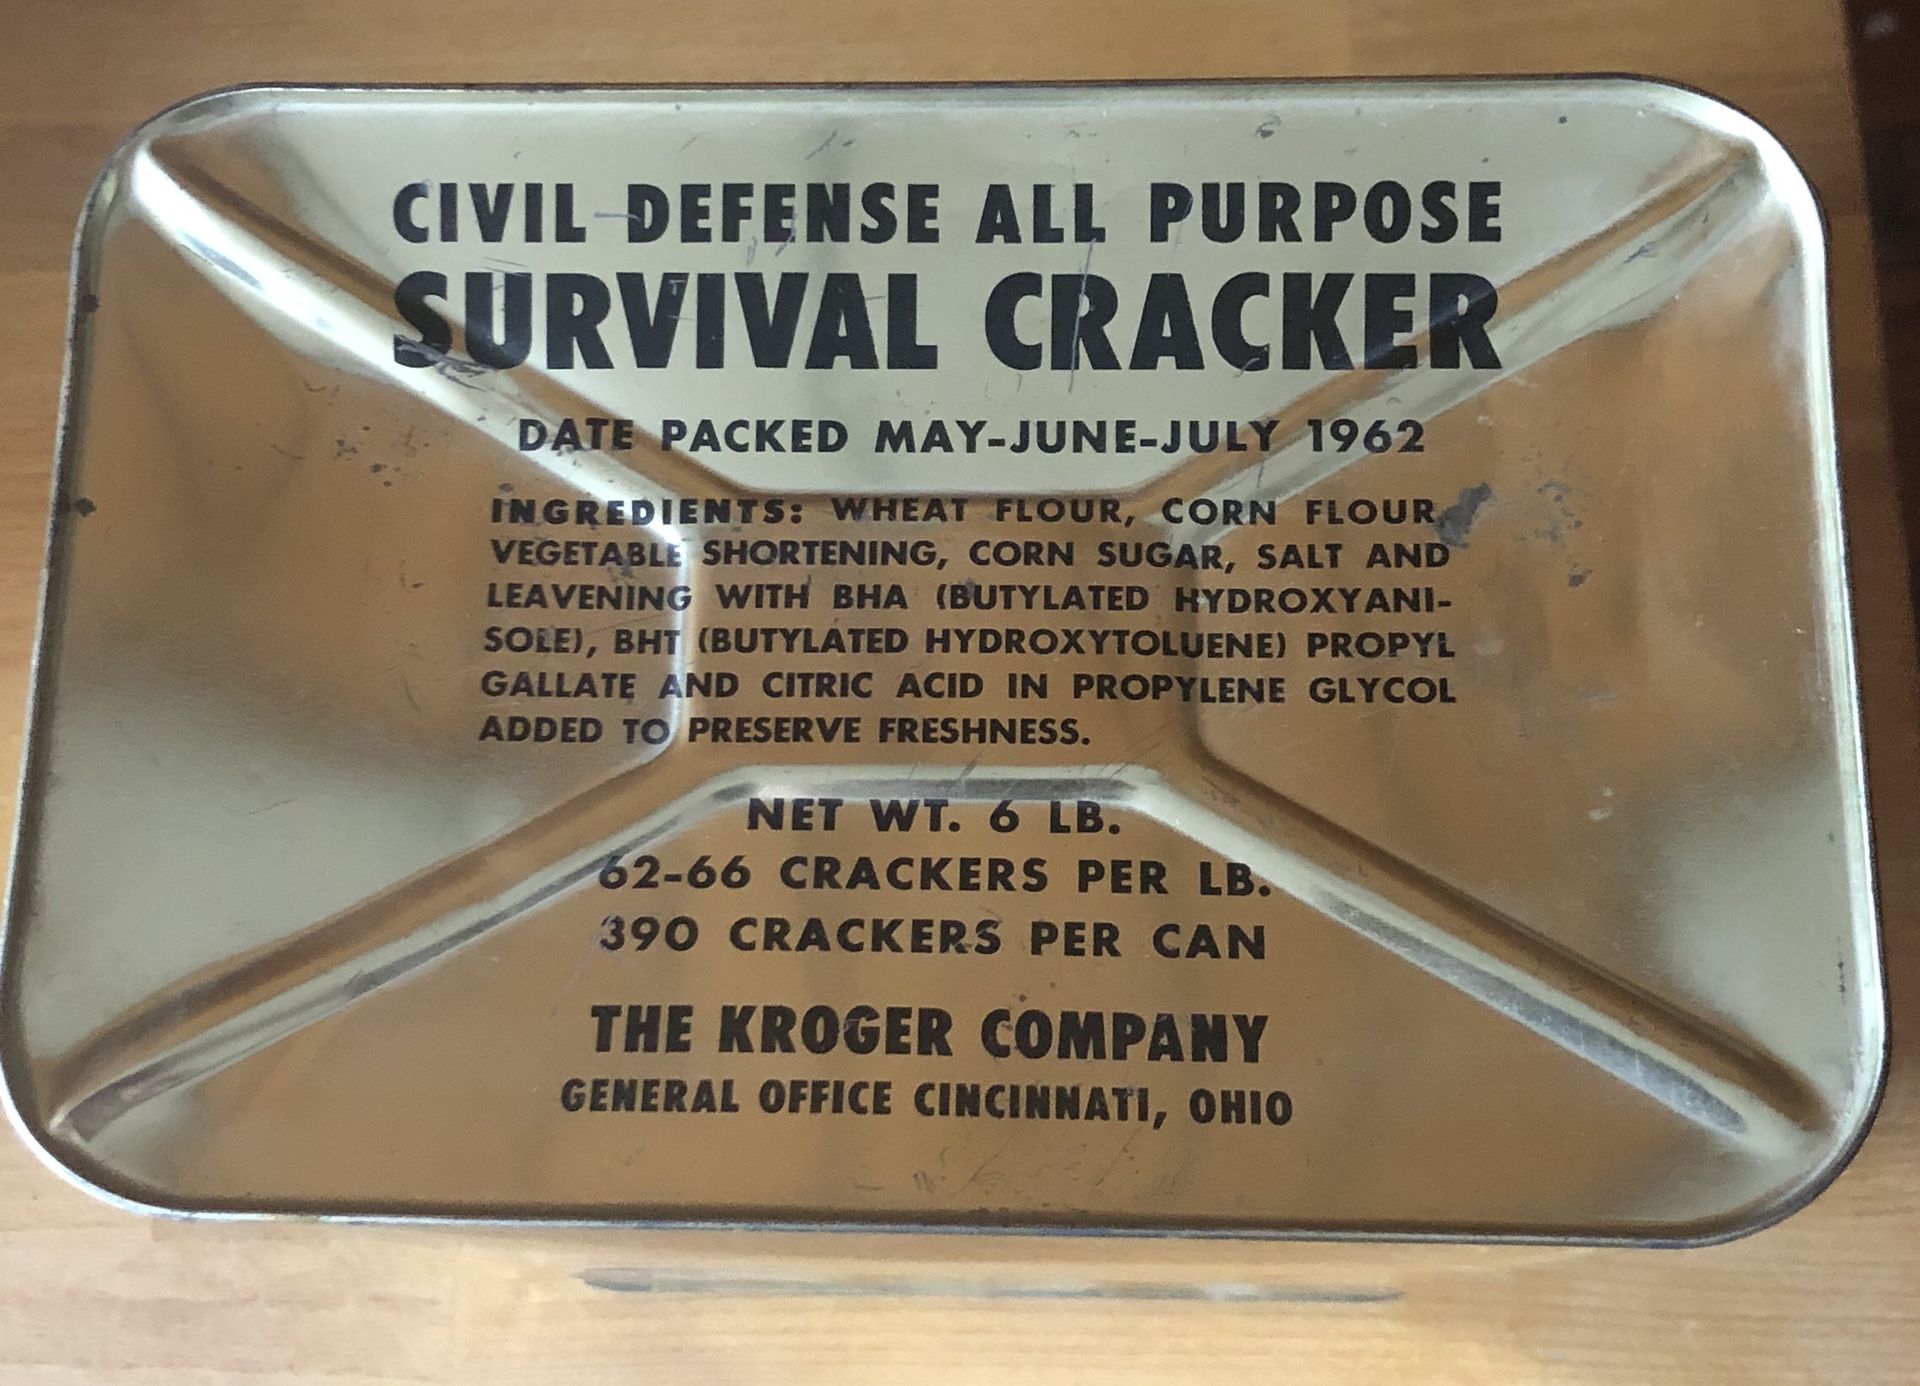 Survival Crackers